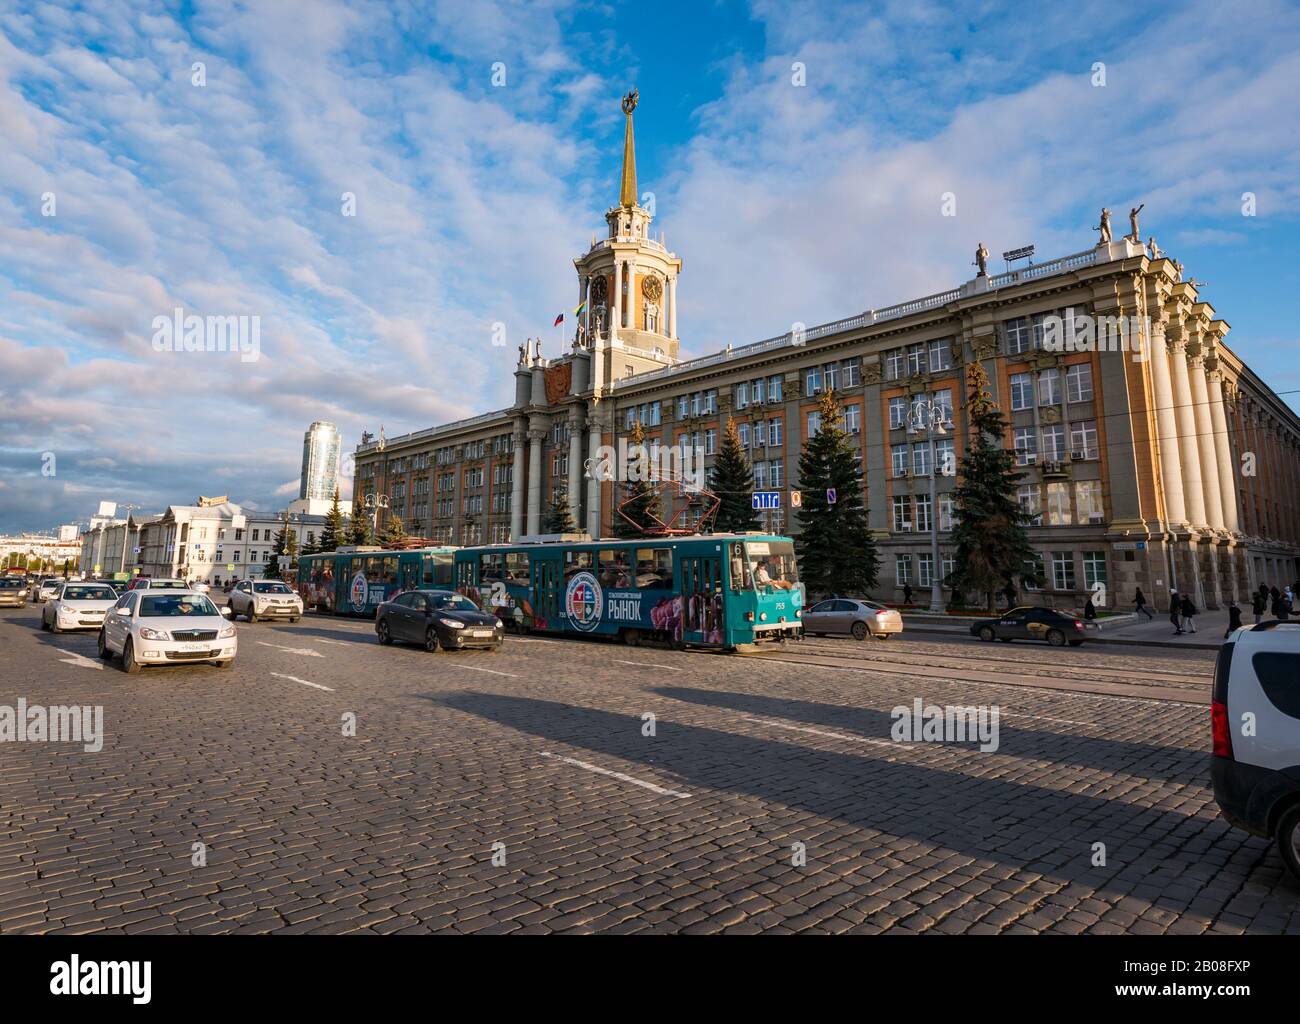 Grand ornate building, Ekaterinburg City Hall, Lenin Avenue, Yekaterinburg, Siberia, Russian federation Stock Photo